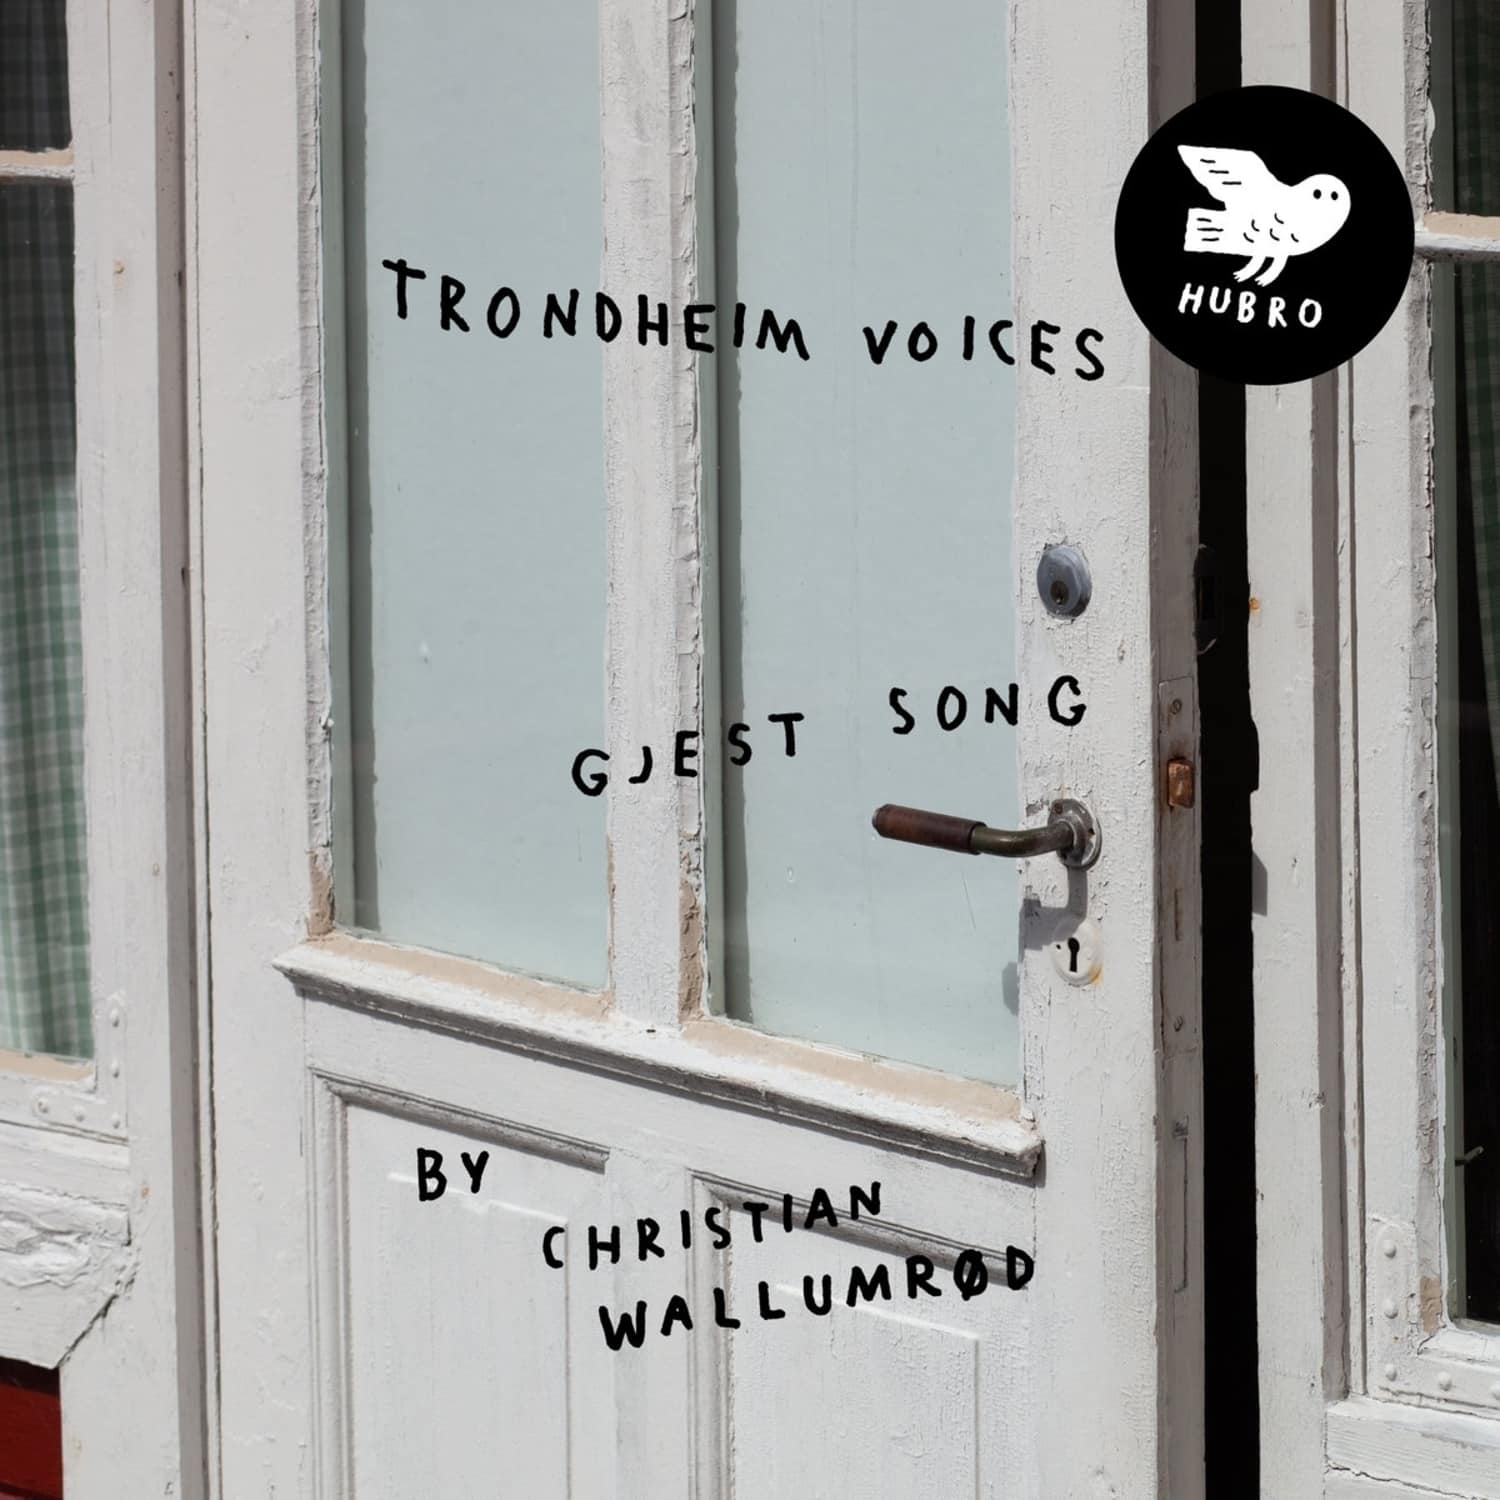 Trondheim Voices & Christian Wallumrod - GJEST SONG 